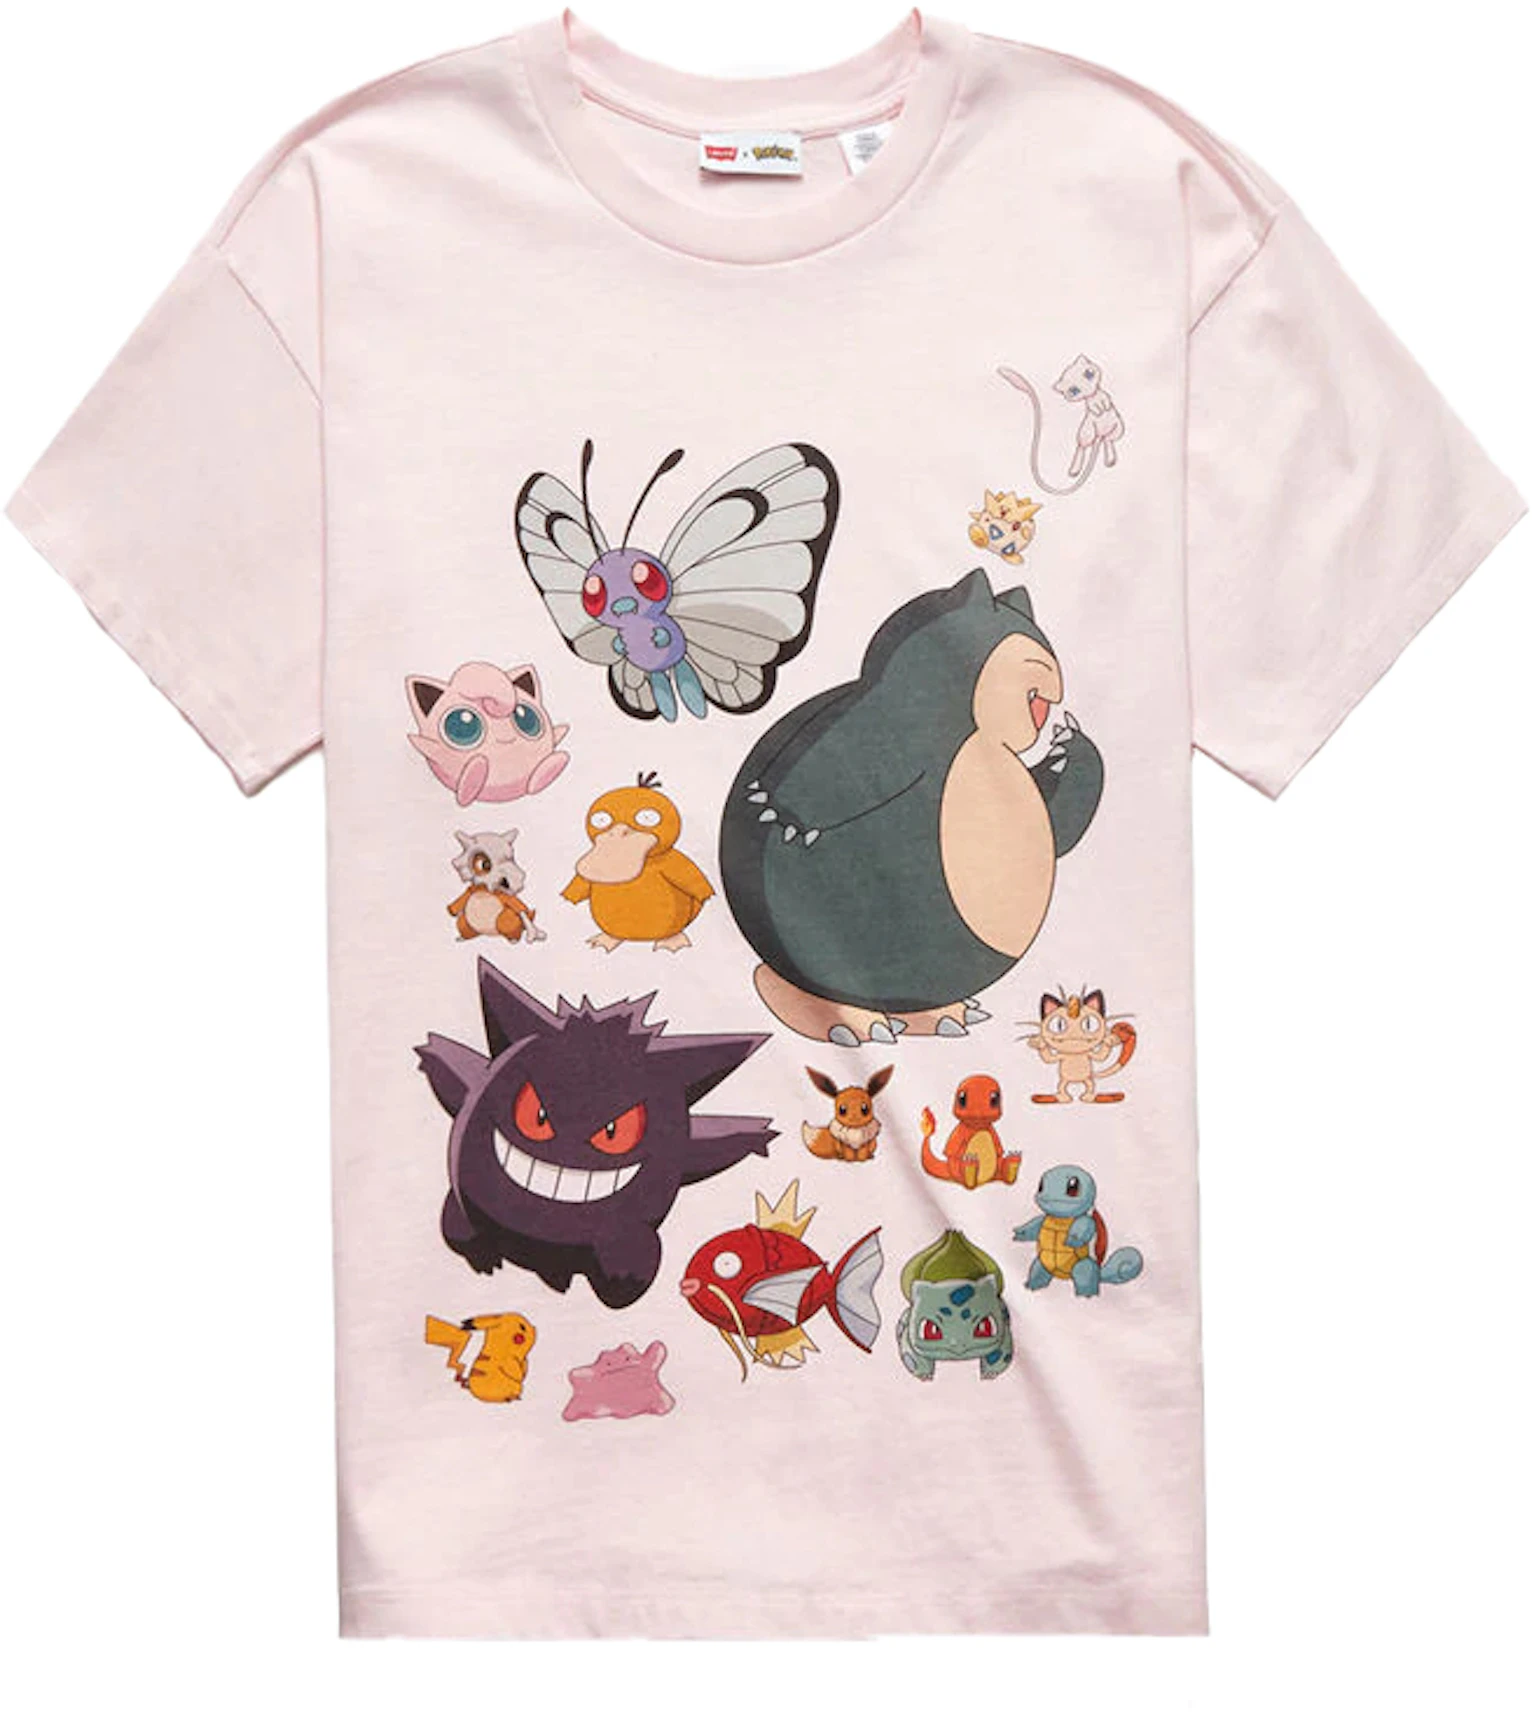 Levis x Pokémon Unisex T-shirt Pink - SS21 - US